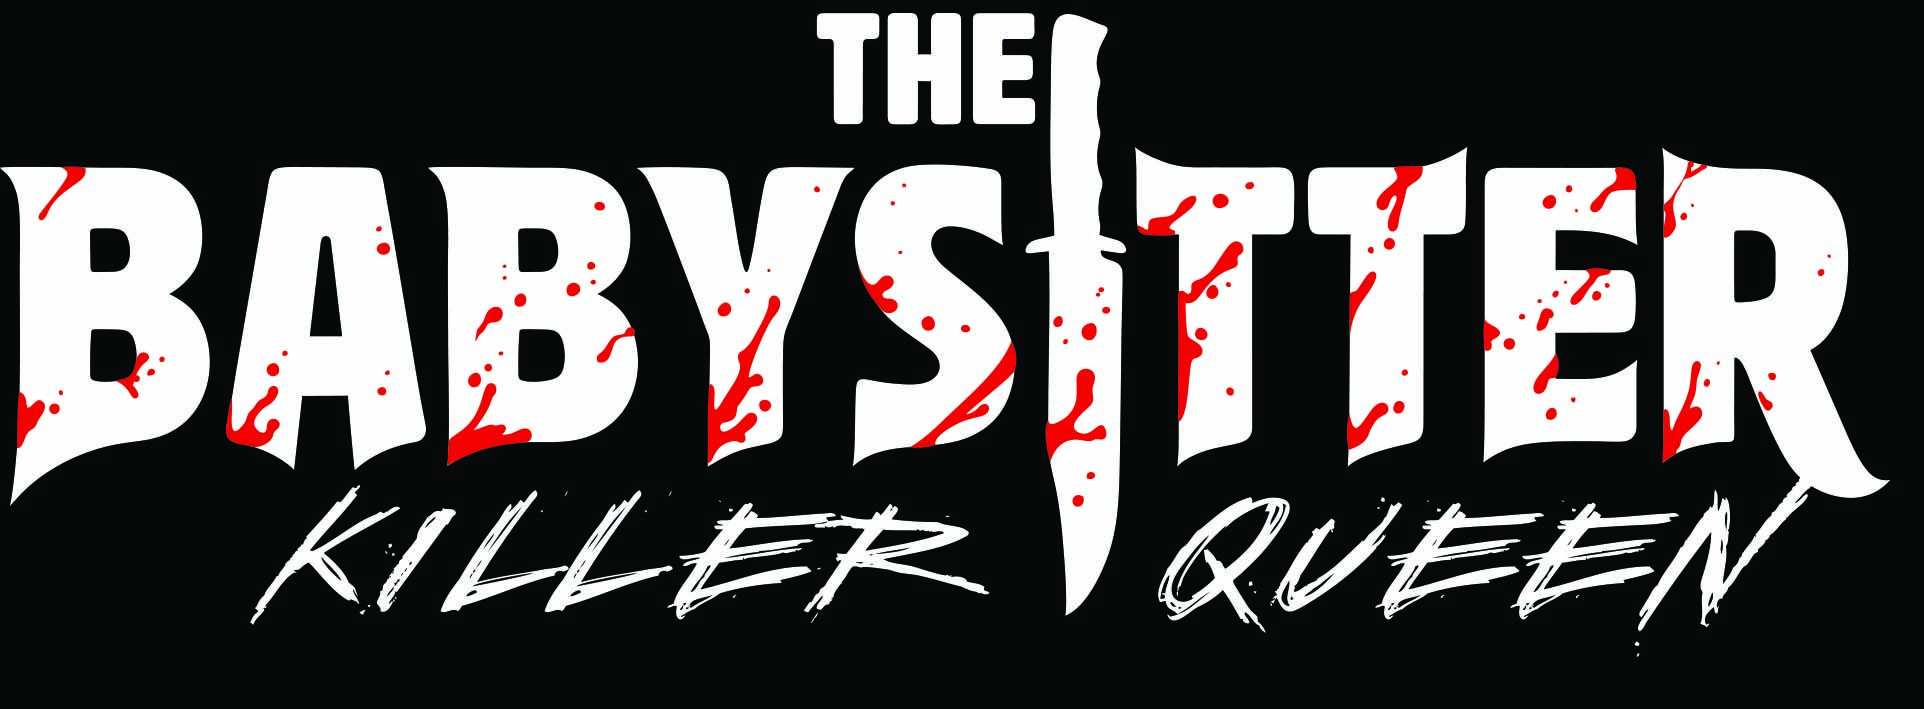 Sequel 'The Babysitter: Killer Queen' Coming to Netflix in September! [ Image]